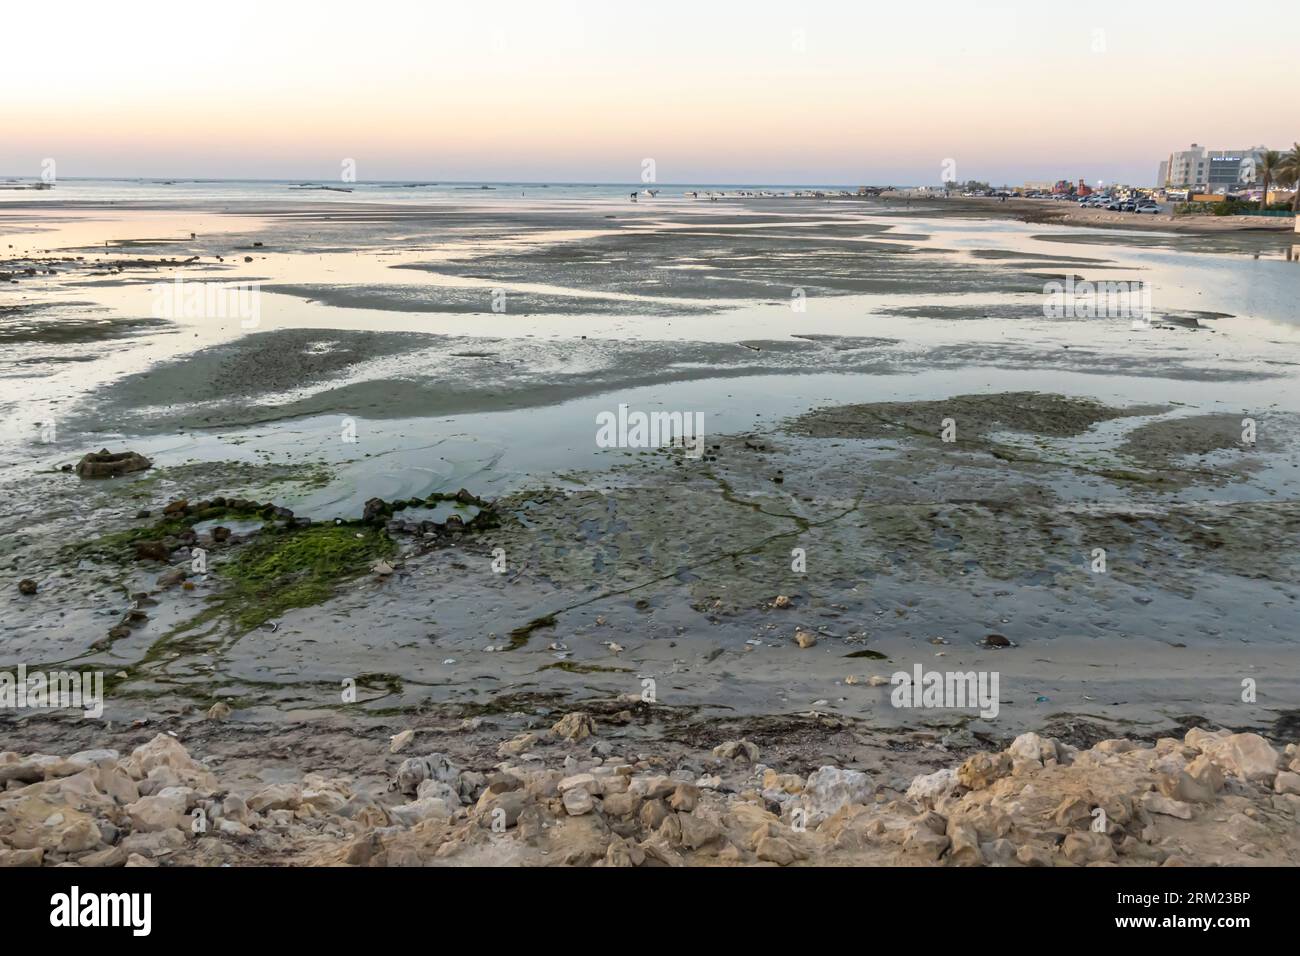 Bahrain Al-Seef, Karbabad beach. Oil spilled reaches the beach leaving oil globs Stock Photo